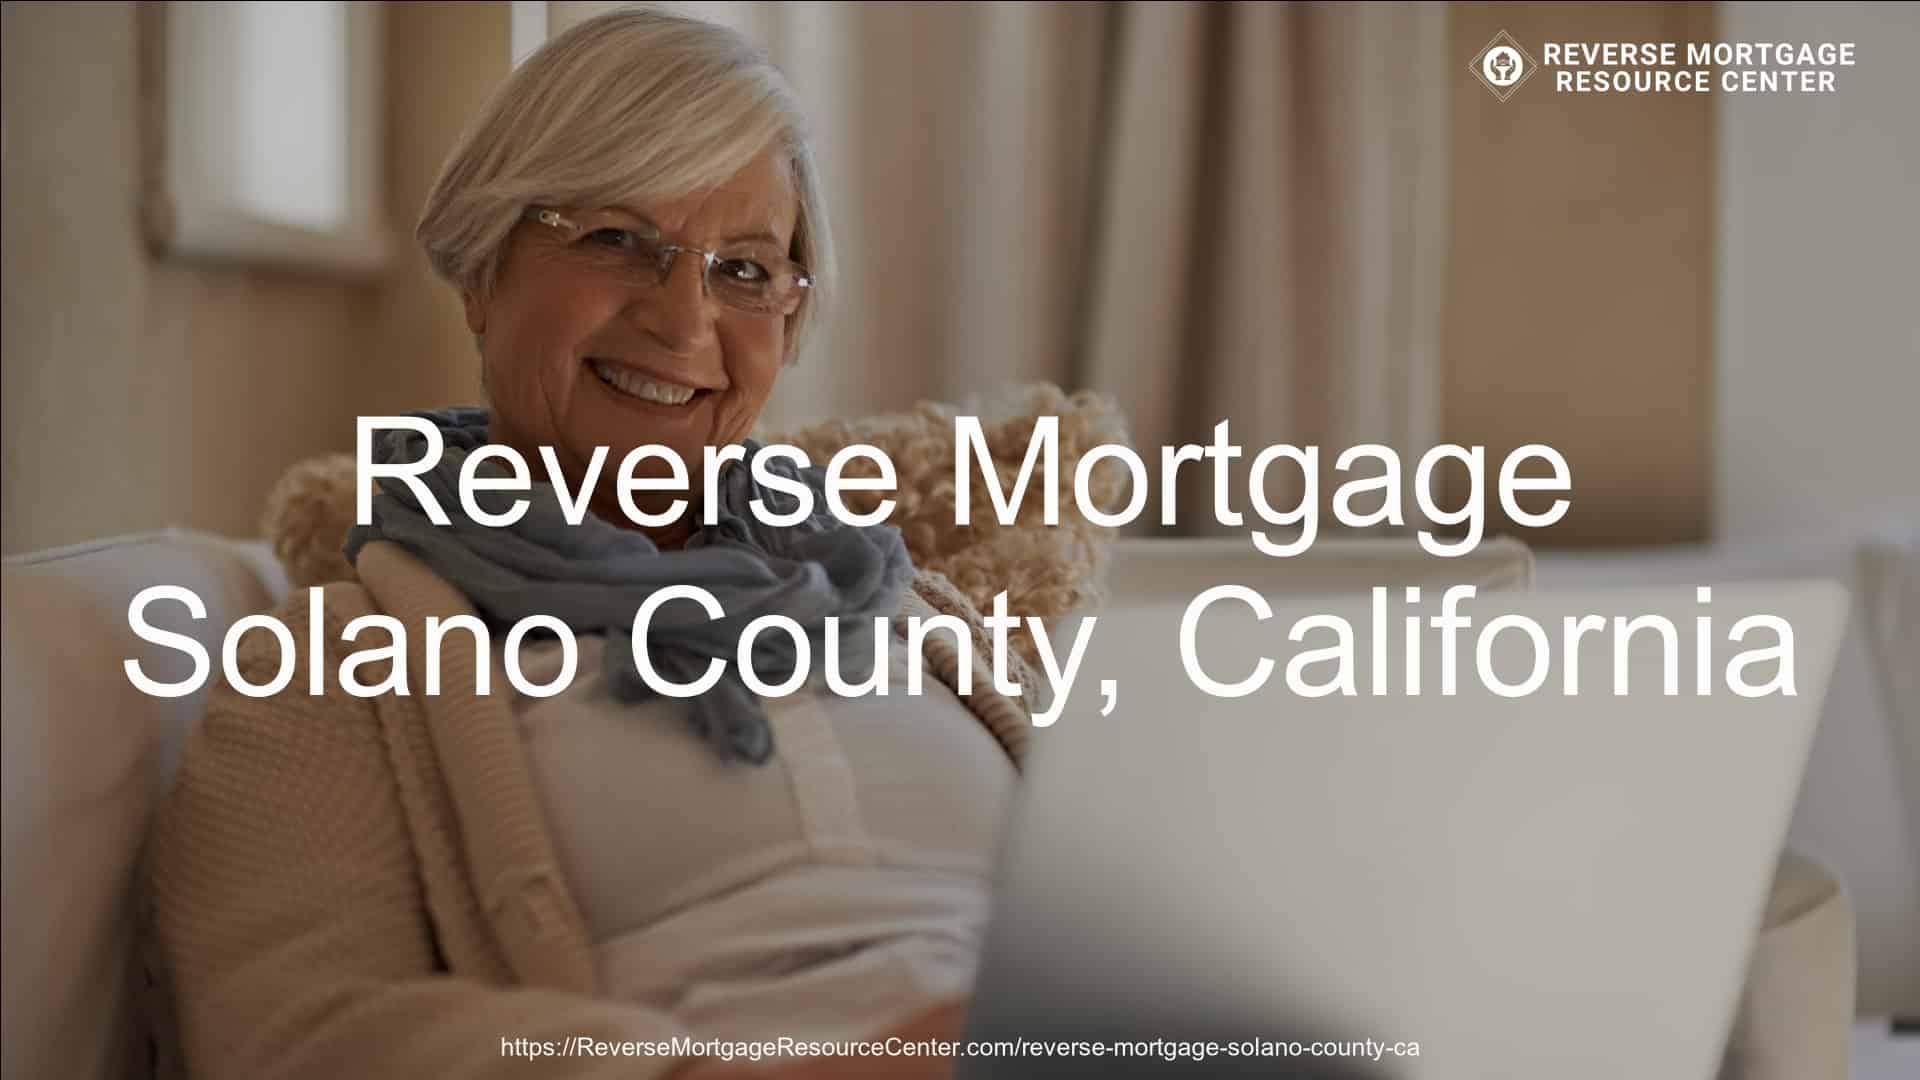 Reverse Mortgage Loans in Solano County California